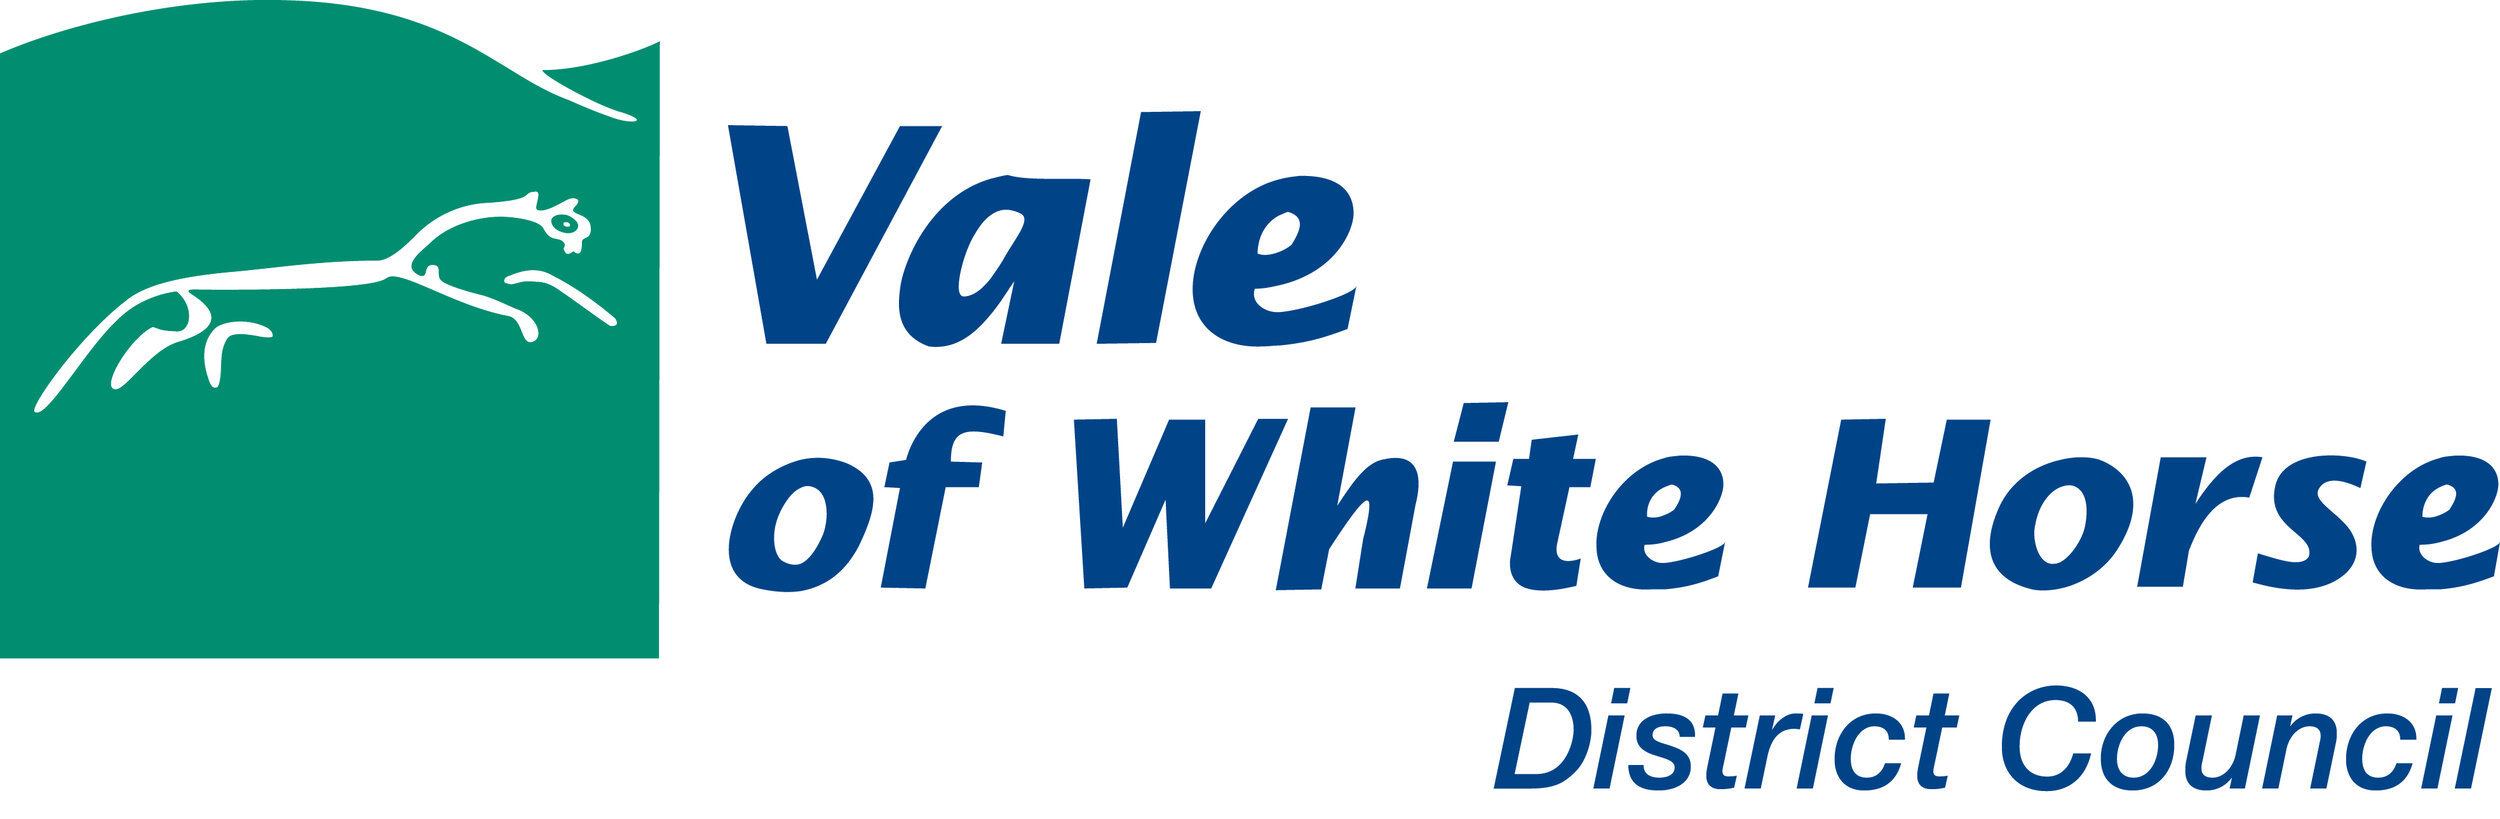 Vale of White Horse District Council (Copy)